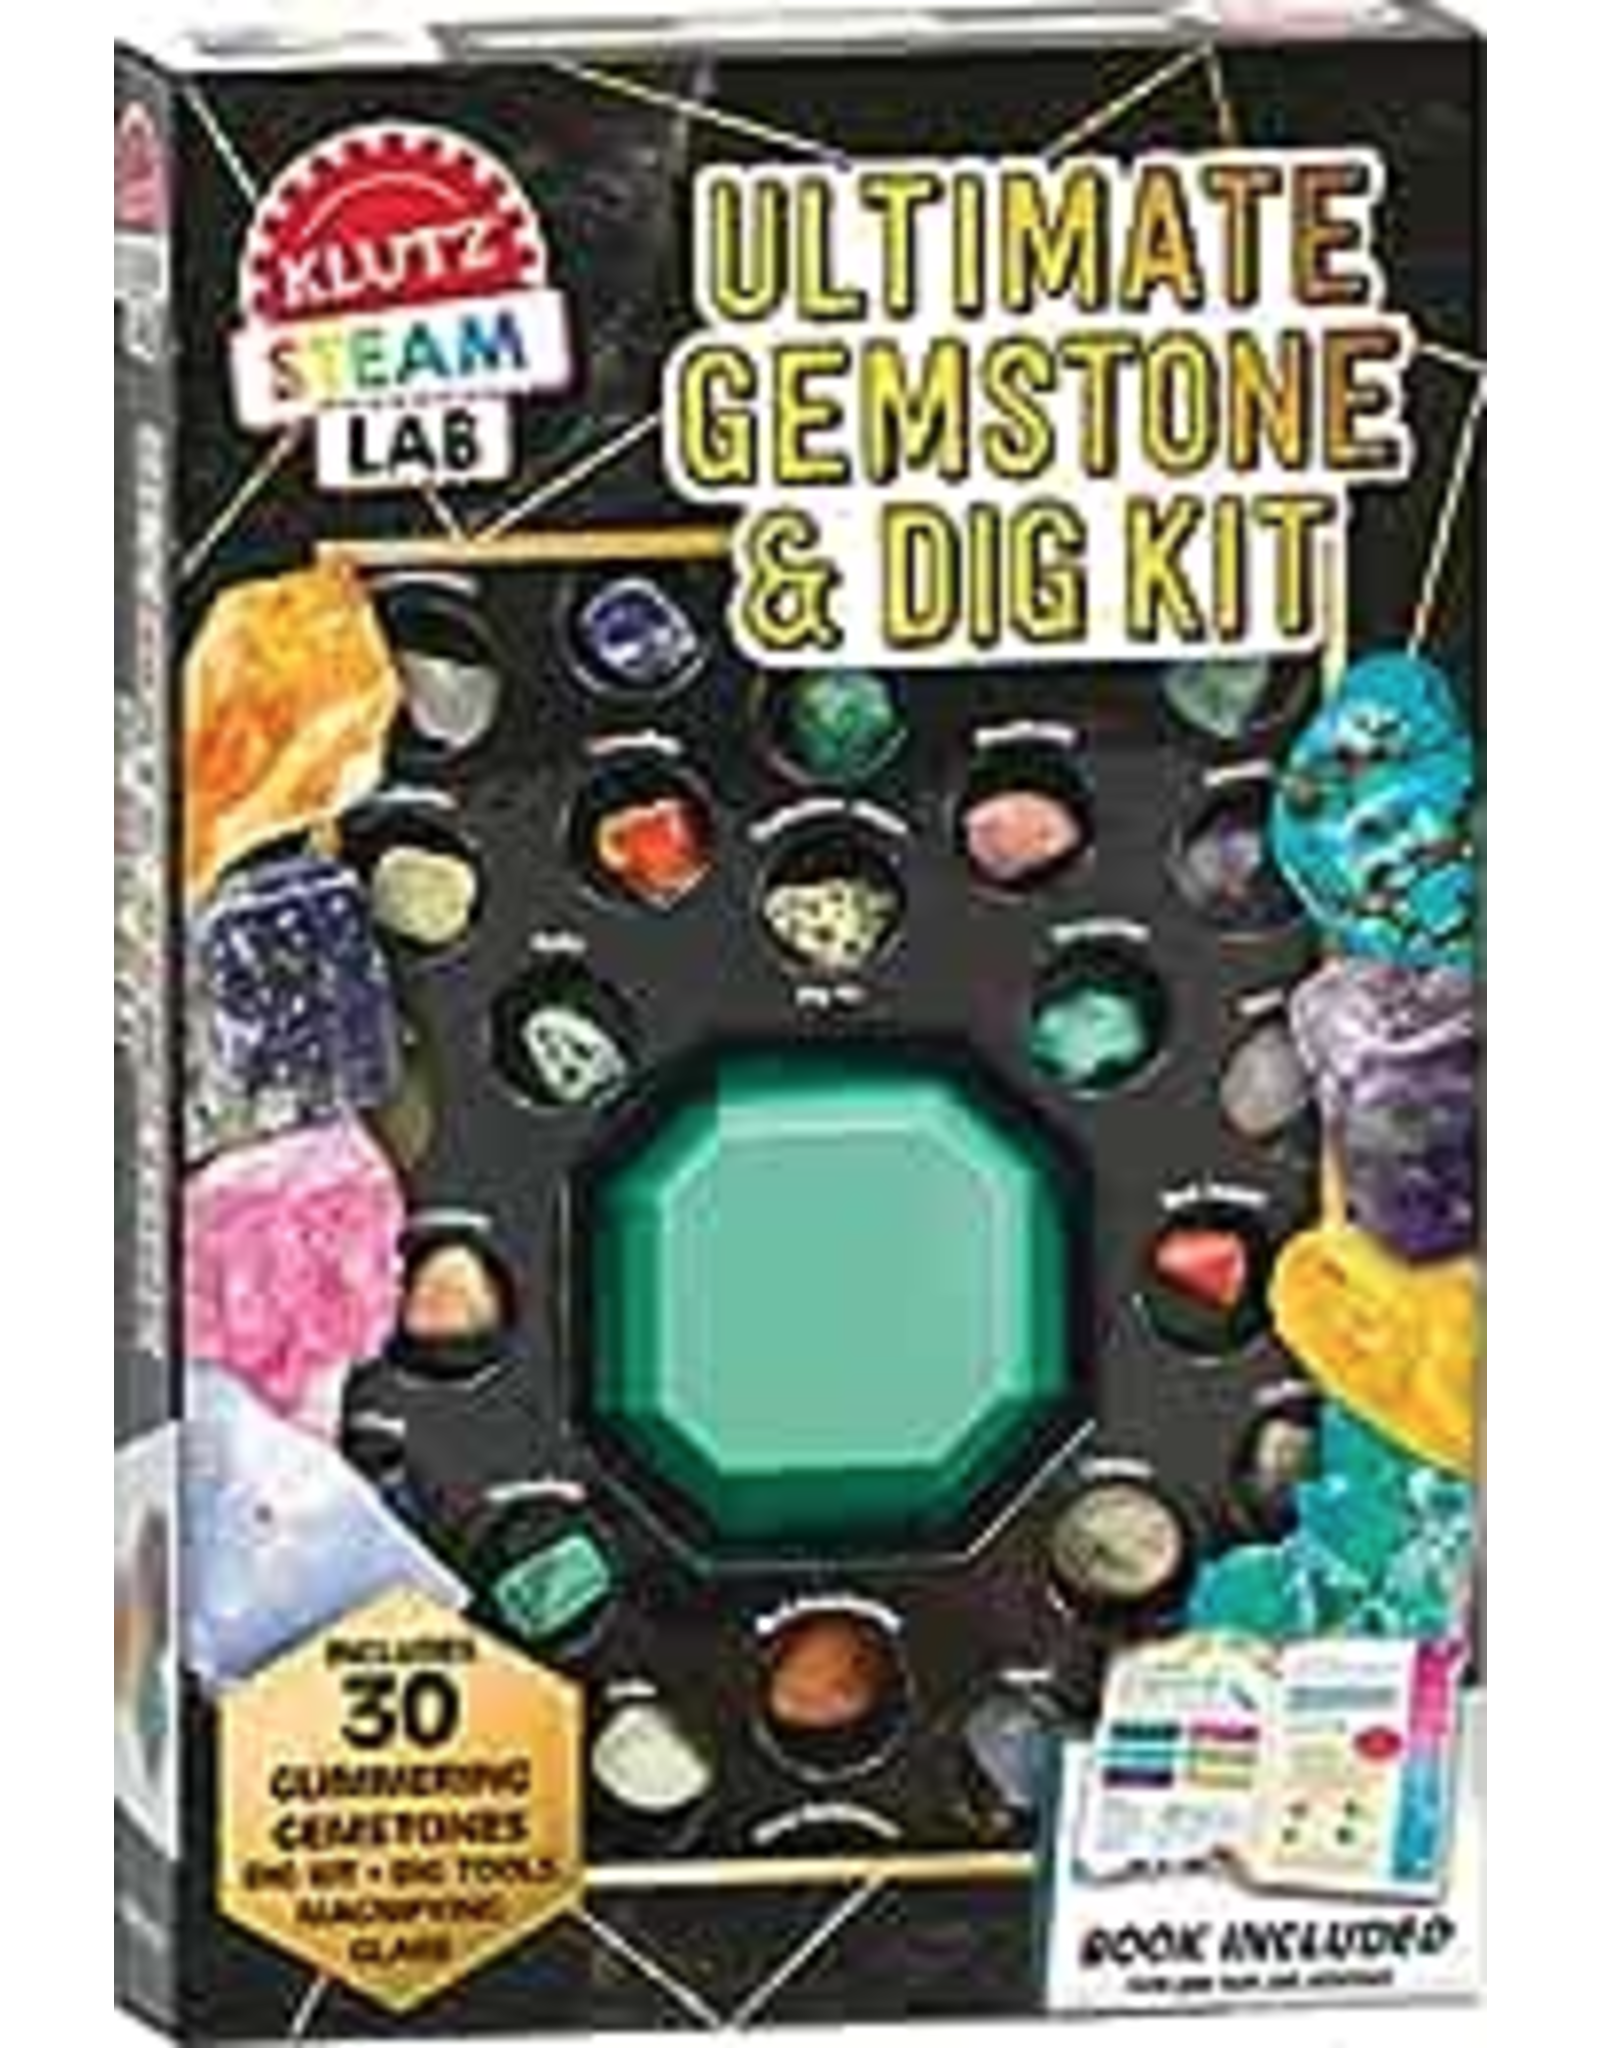 Klutz Steam Lab Ultimate Gemstone And Dig Kit